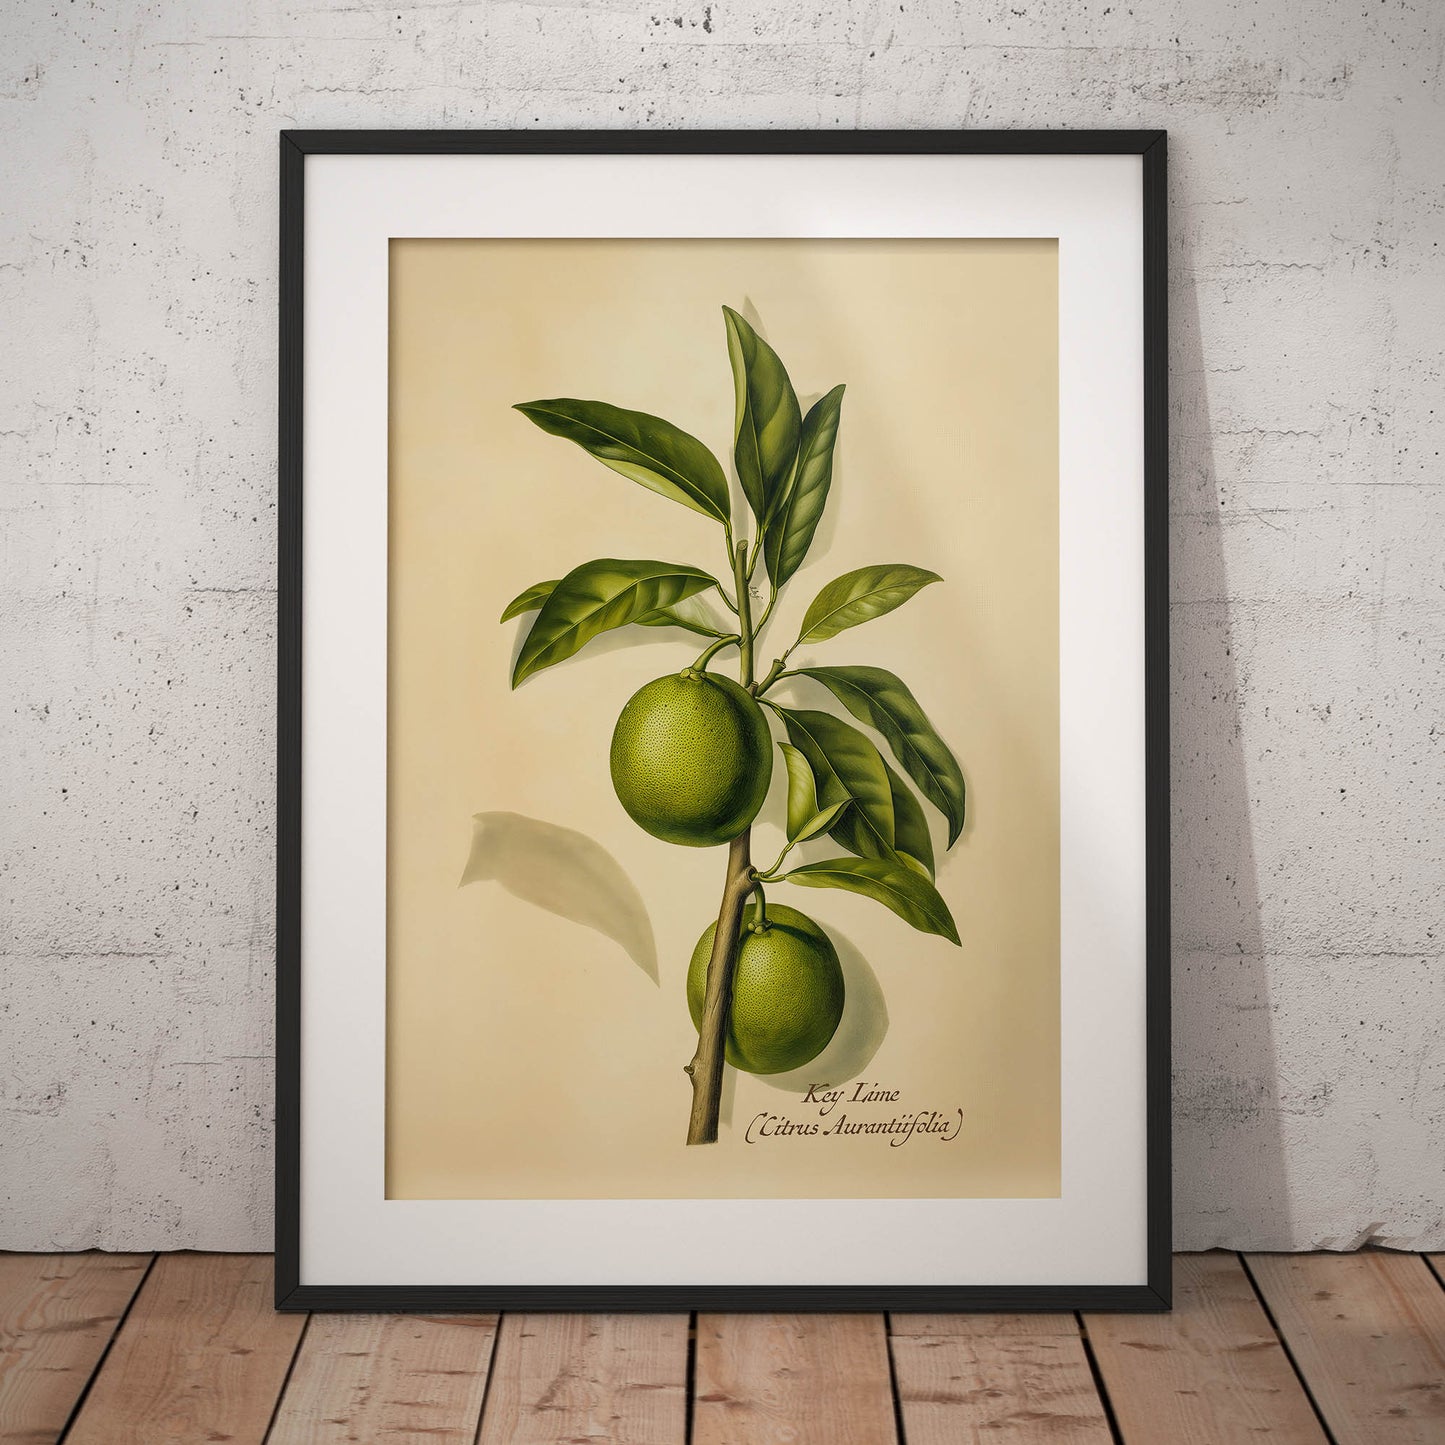 »Key Lime« botanisk vintageposter